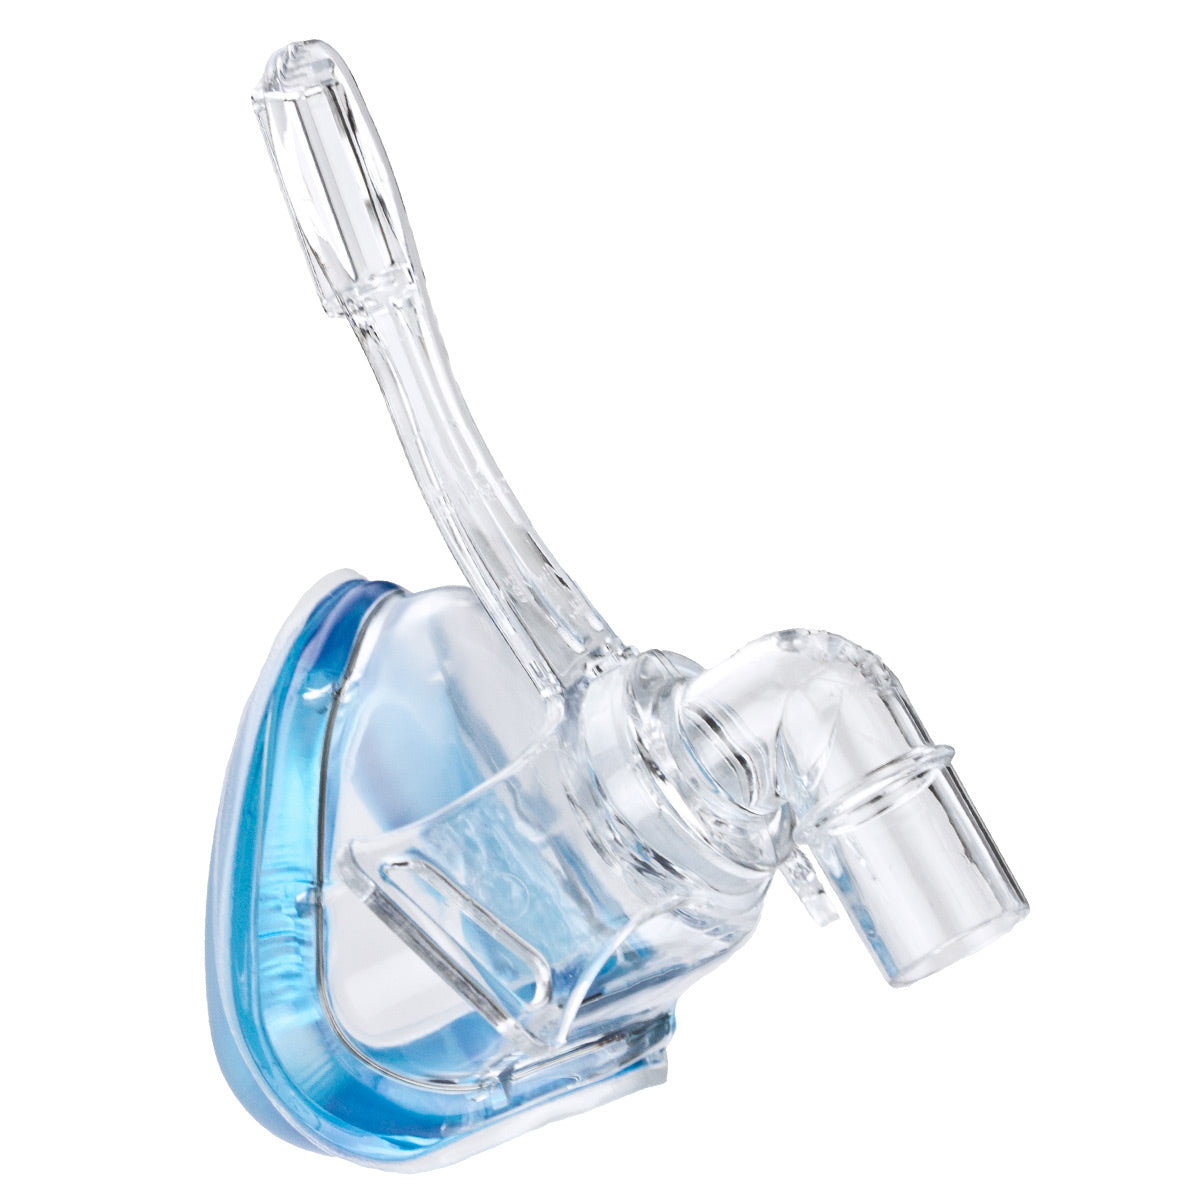 SleepNet MiniMe Pediatric Nasal CPAP Mask With Headgear, Large